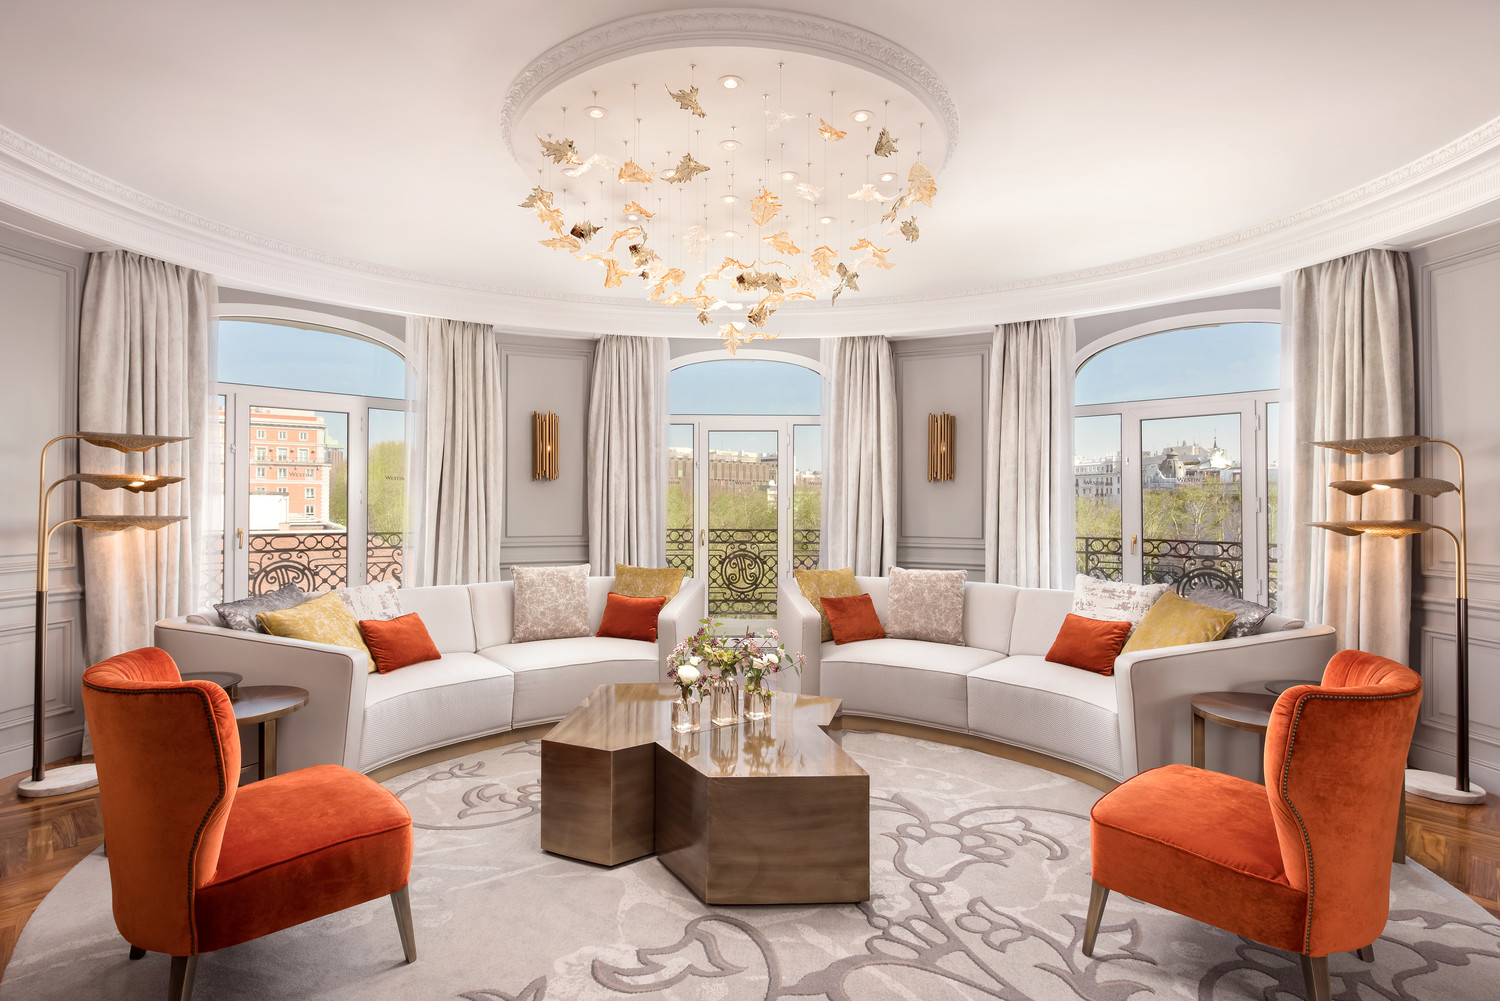 Hotel Westin Palace, Madrid 的皇家套房 The Royal Suite，特別融合了美好年代 (Belle Époque) 的裝飾風情。